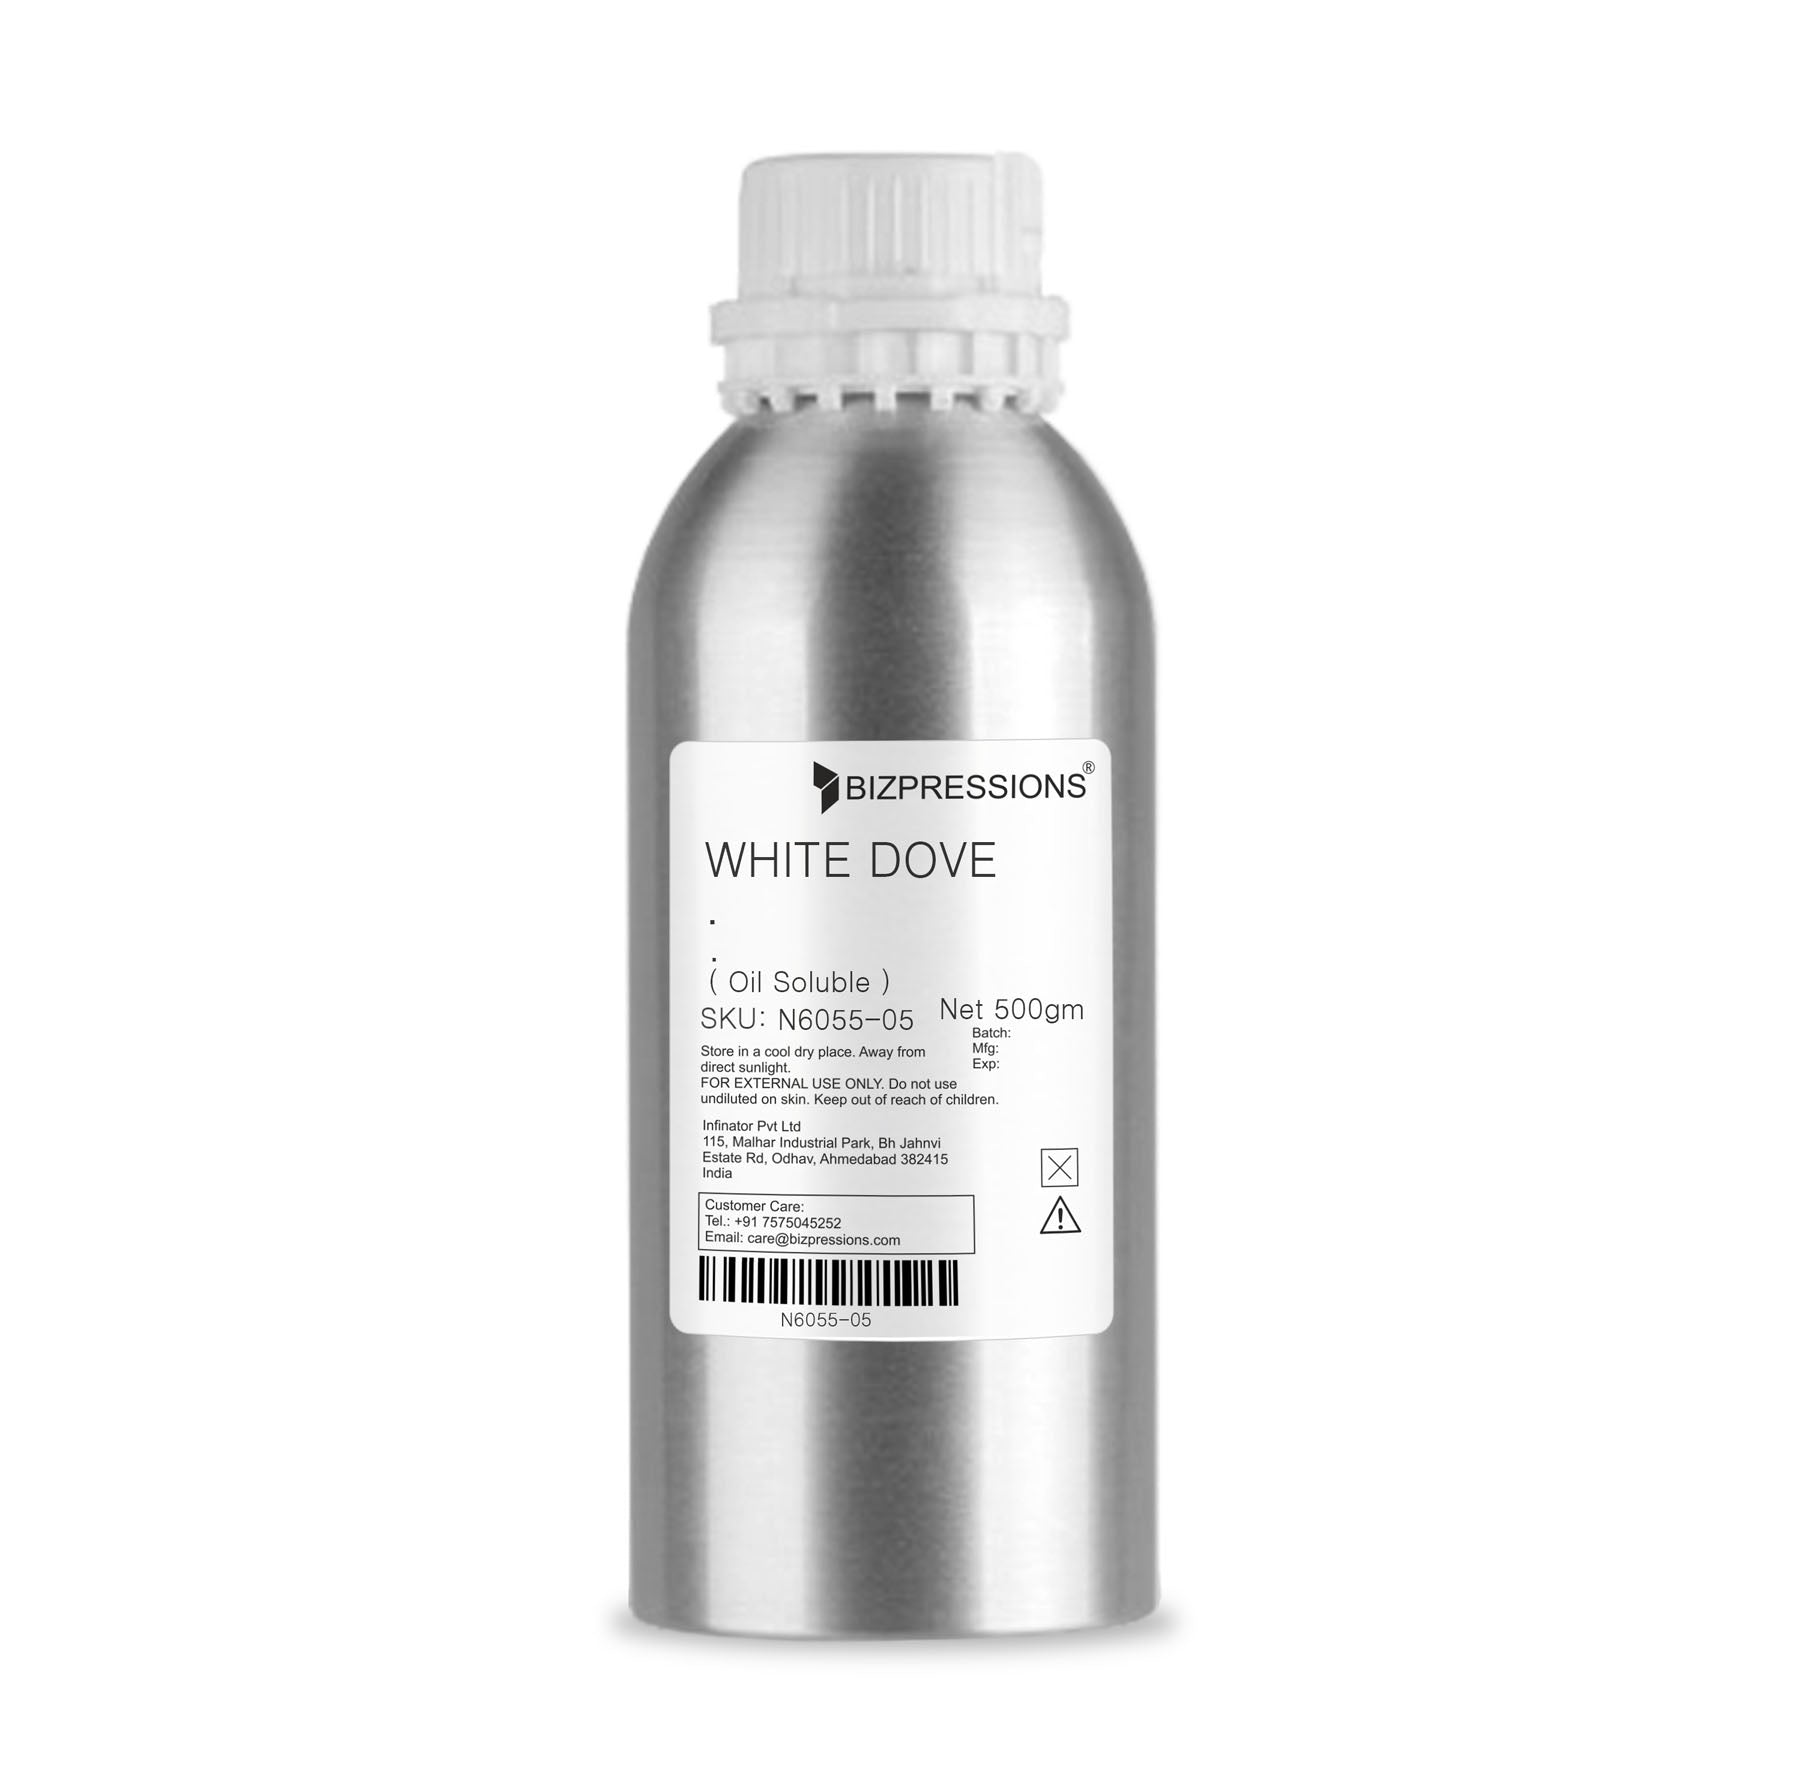 WHITE DOVE - Fragrance ( Oil Soluble ) - 500 gm